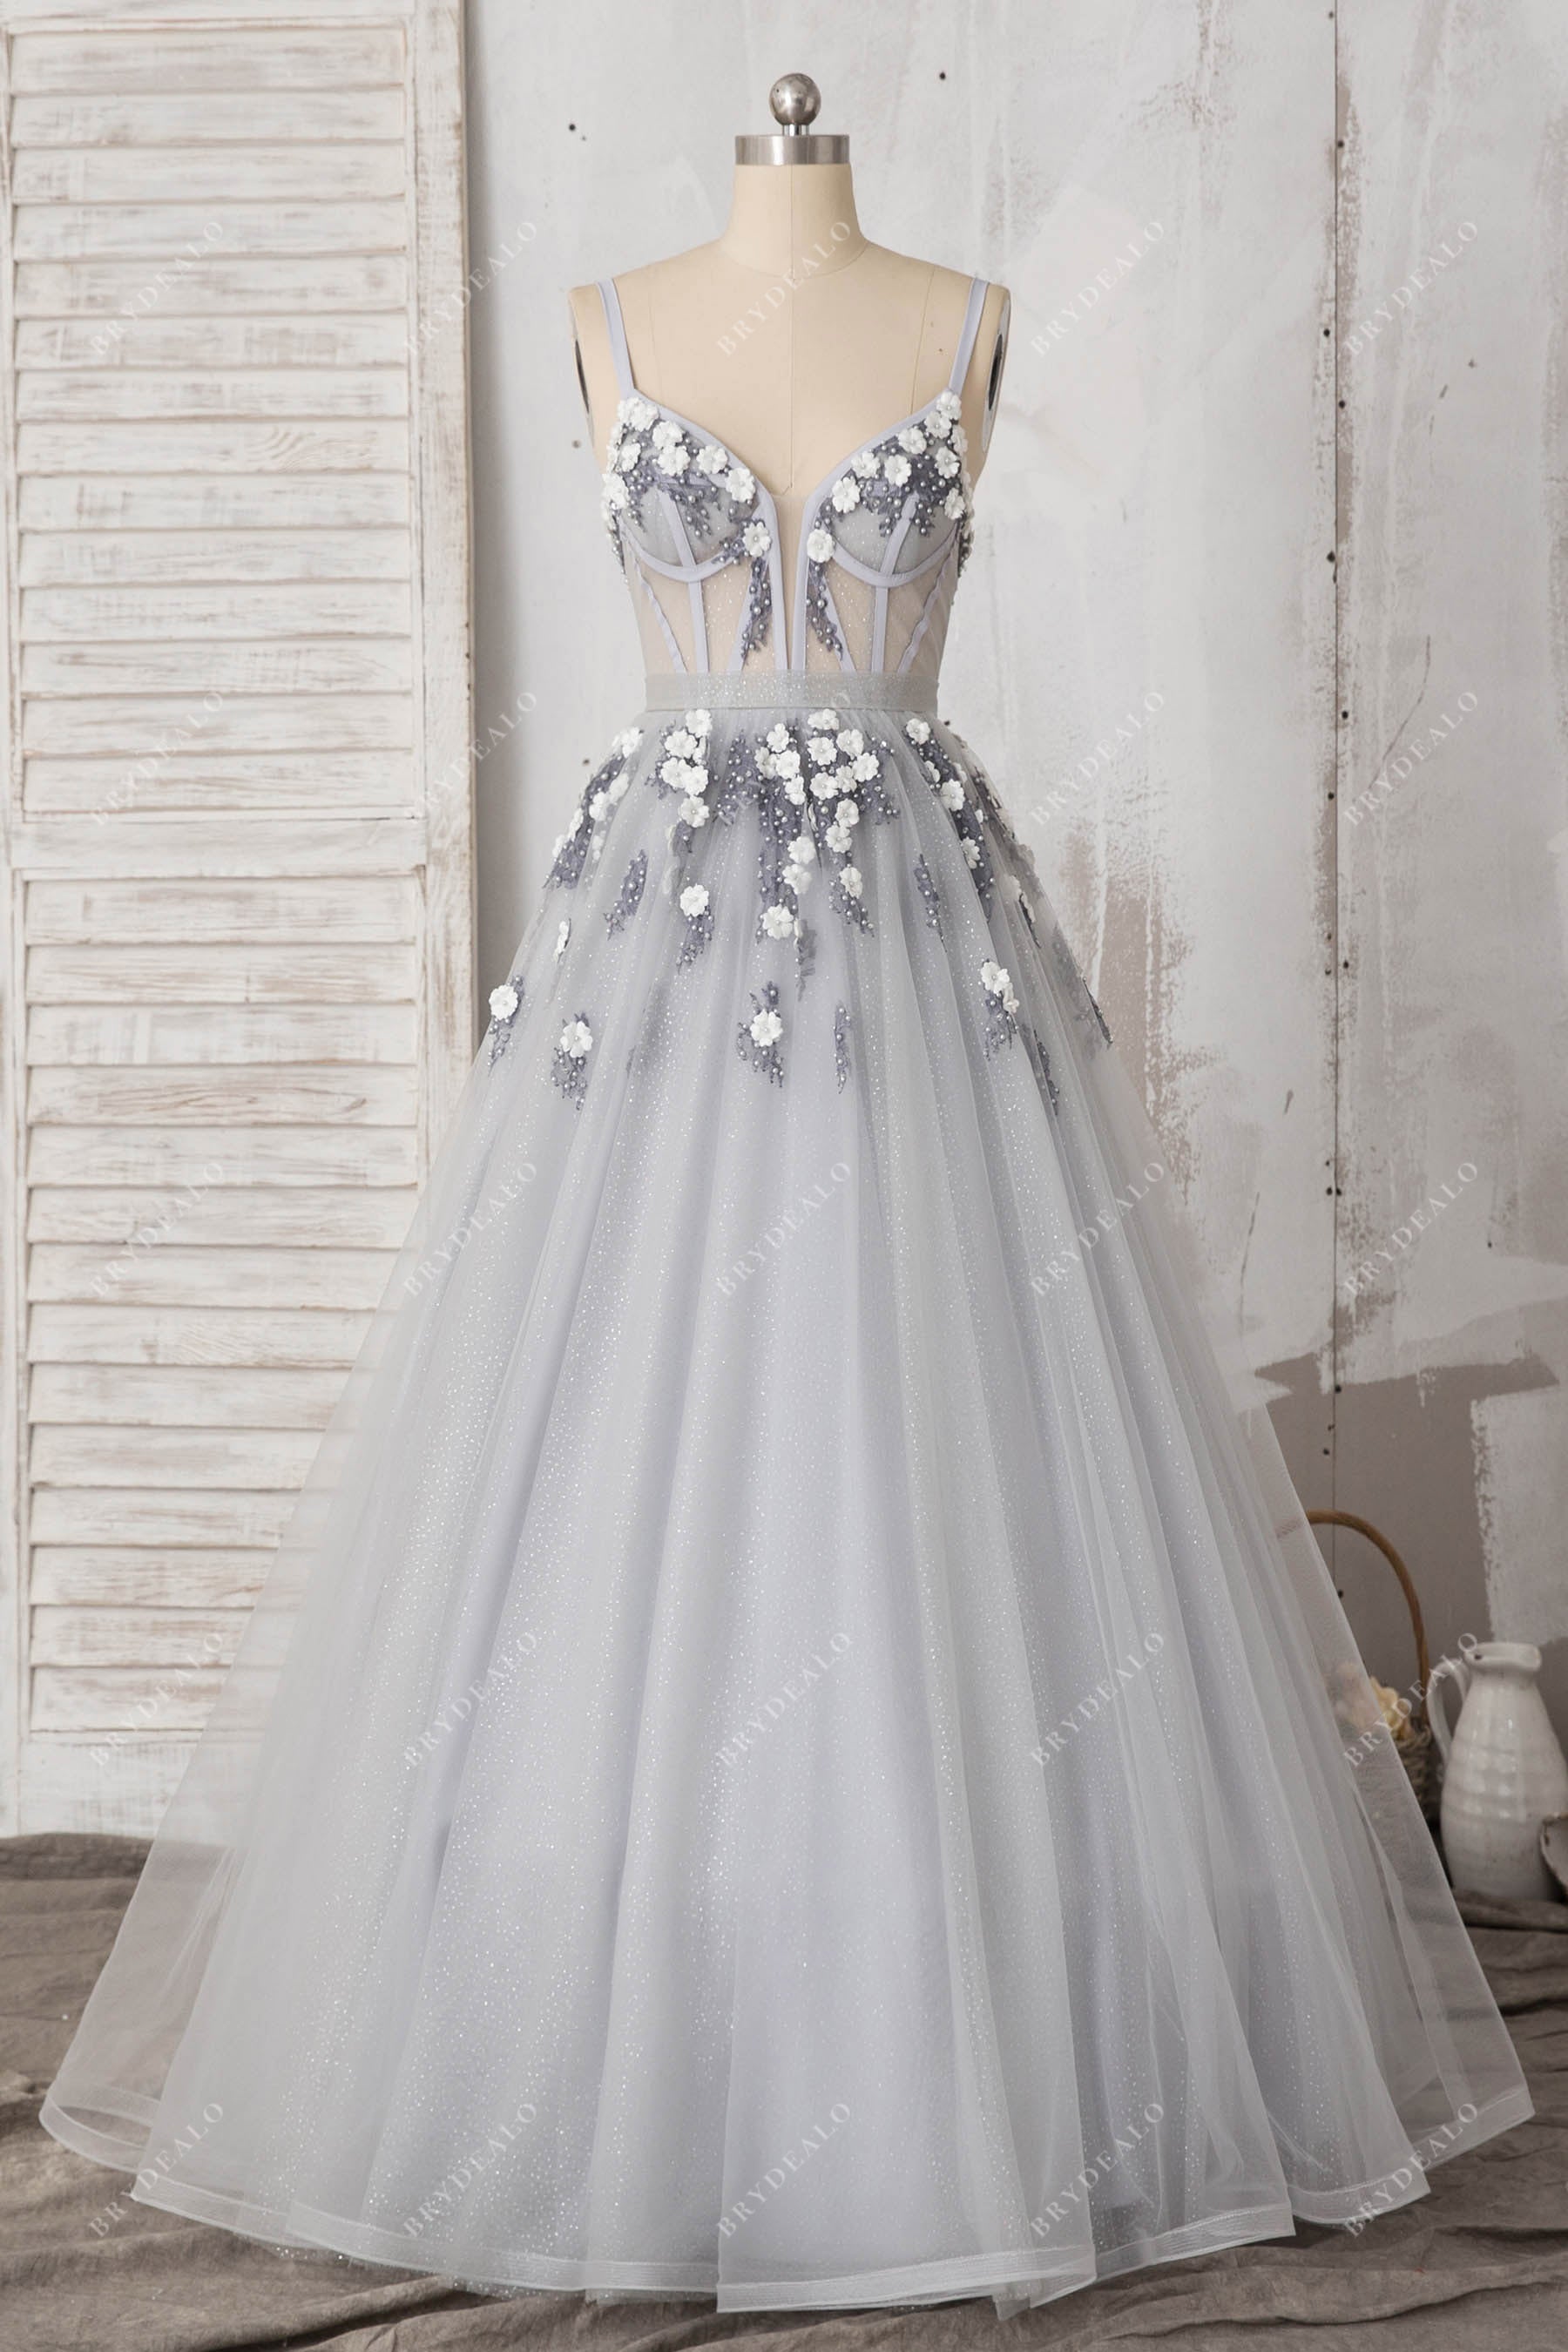 Pearls Flower Silver Sweetheart Corset Prom Dress